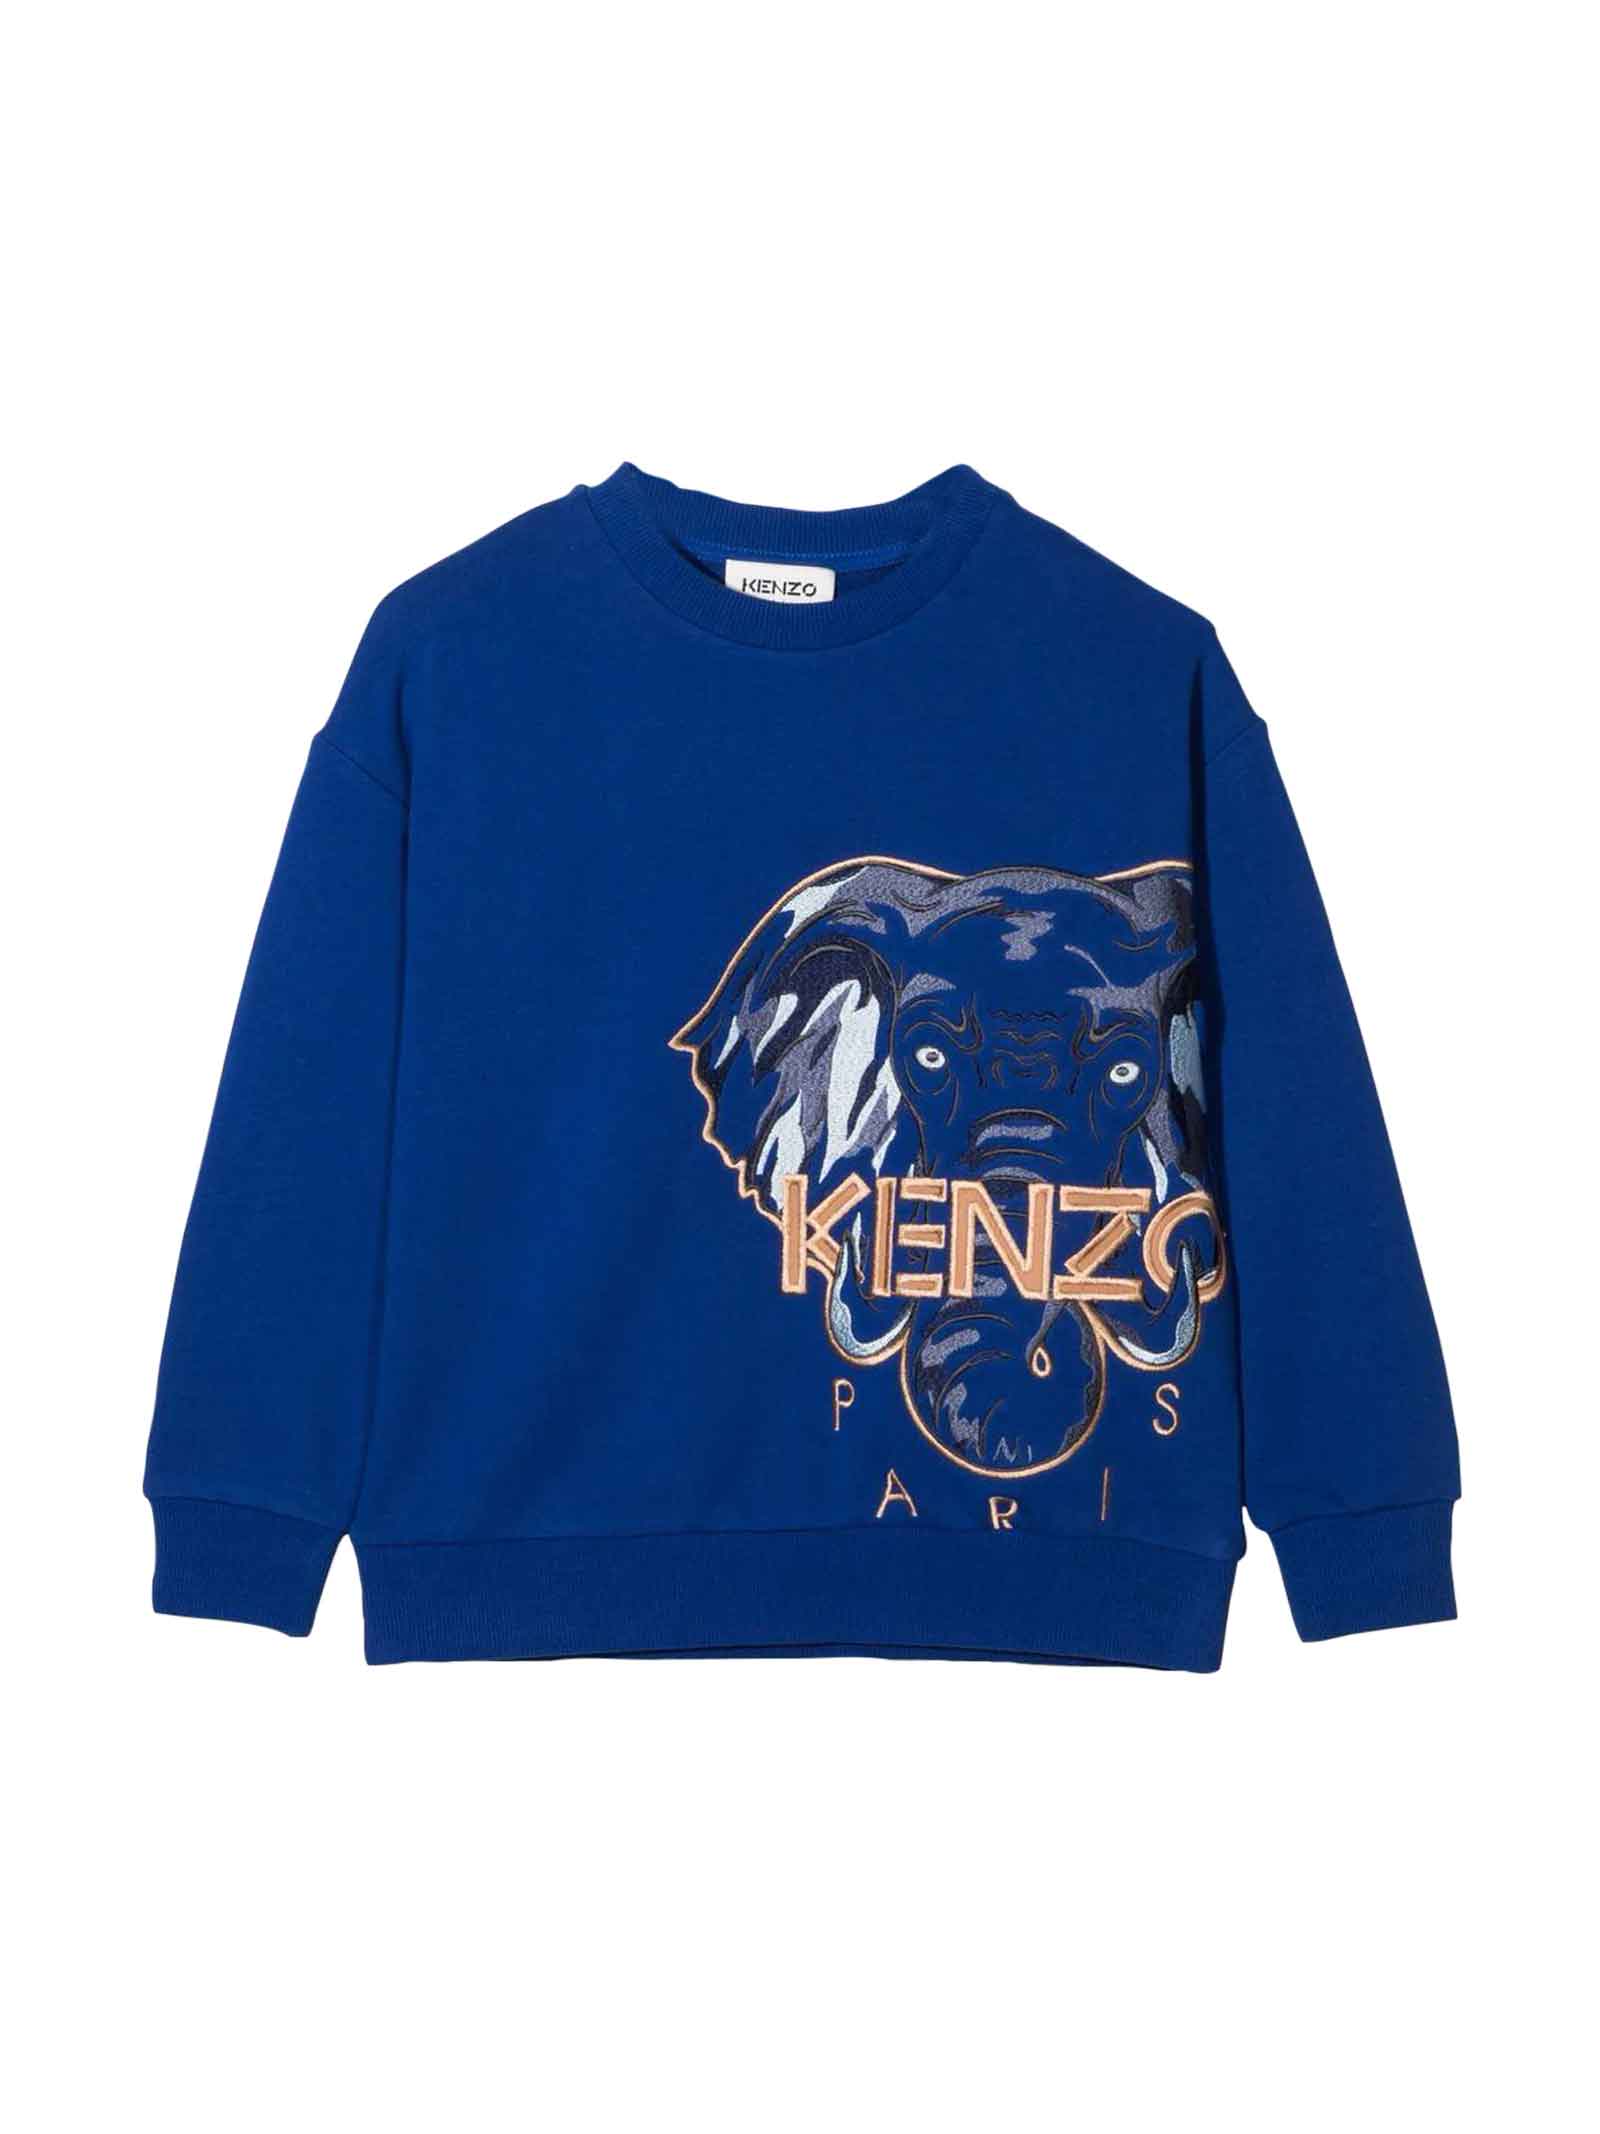 Kenzo Kids Unisex Blue Sweatshirt